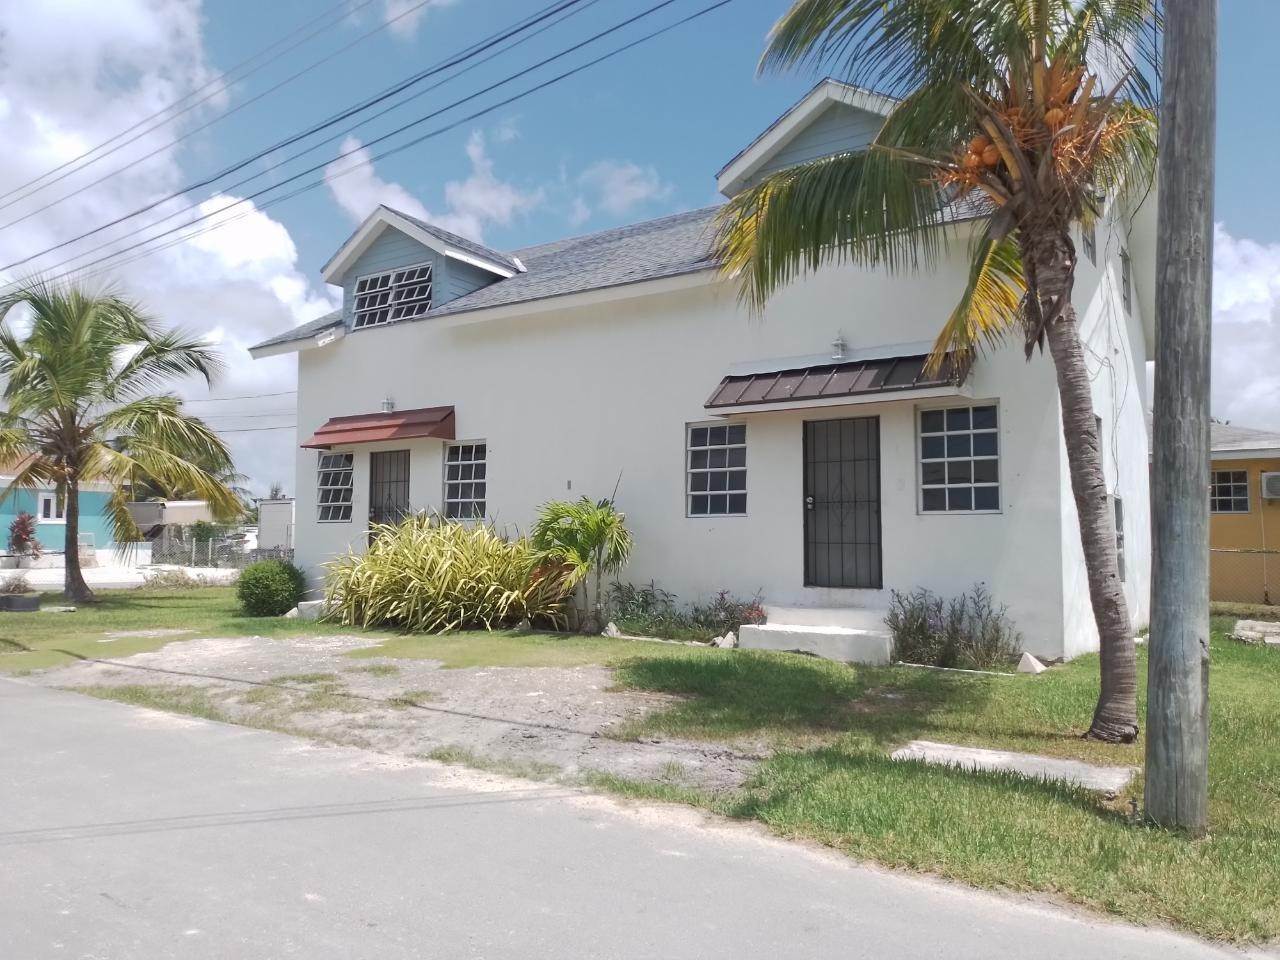 Condo for Sale at Joe Farrington Road, Nassau and Paradise Island Bahamas